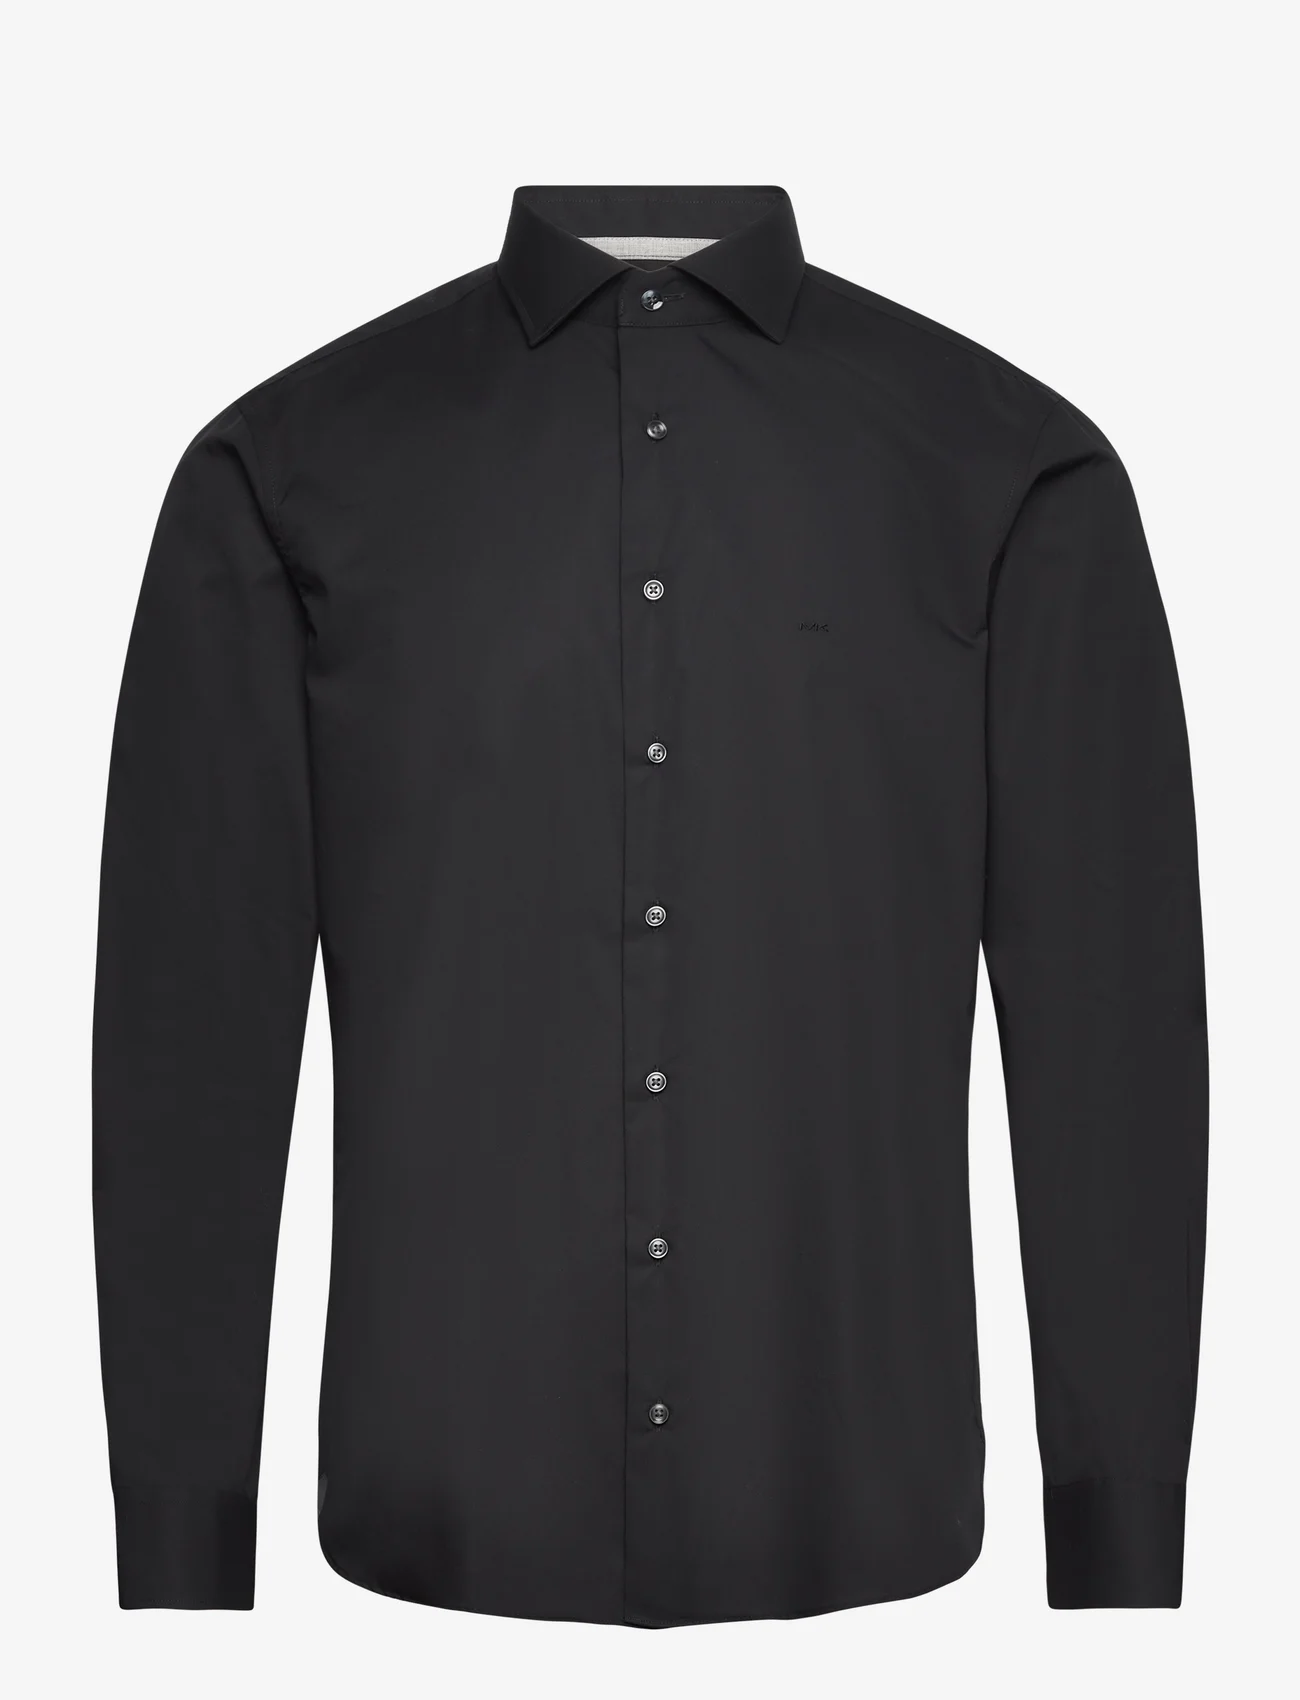 Michael Kors - POPLIN STRETCH MODERN SHIRT - basic skjortor - black - 0